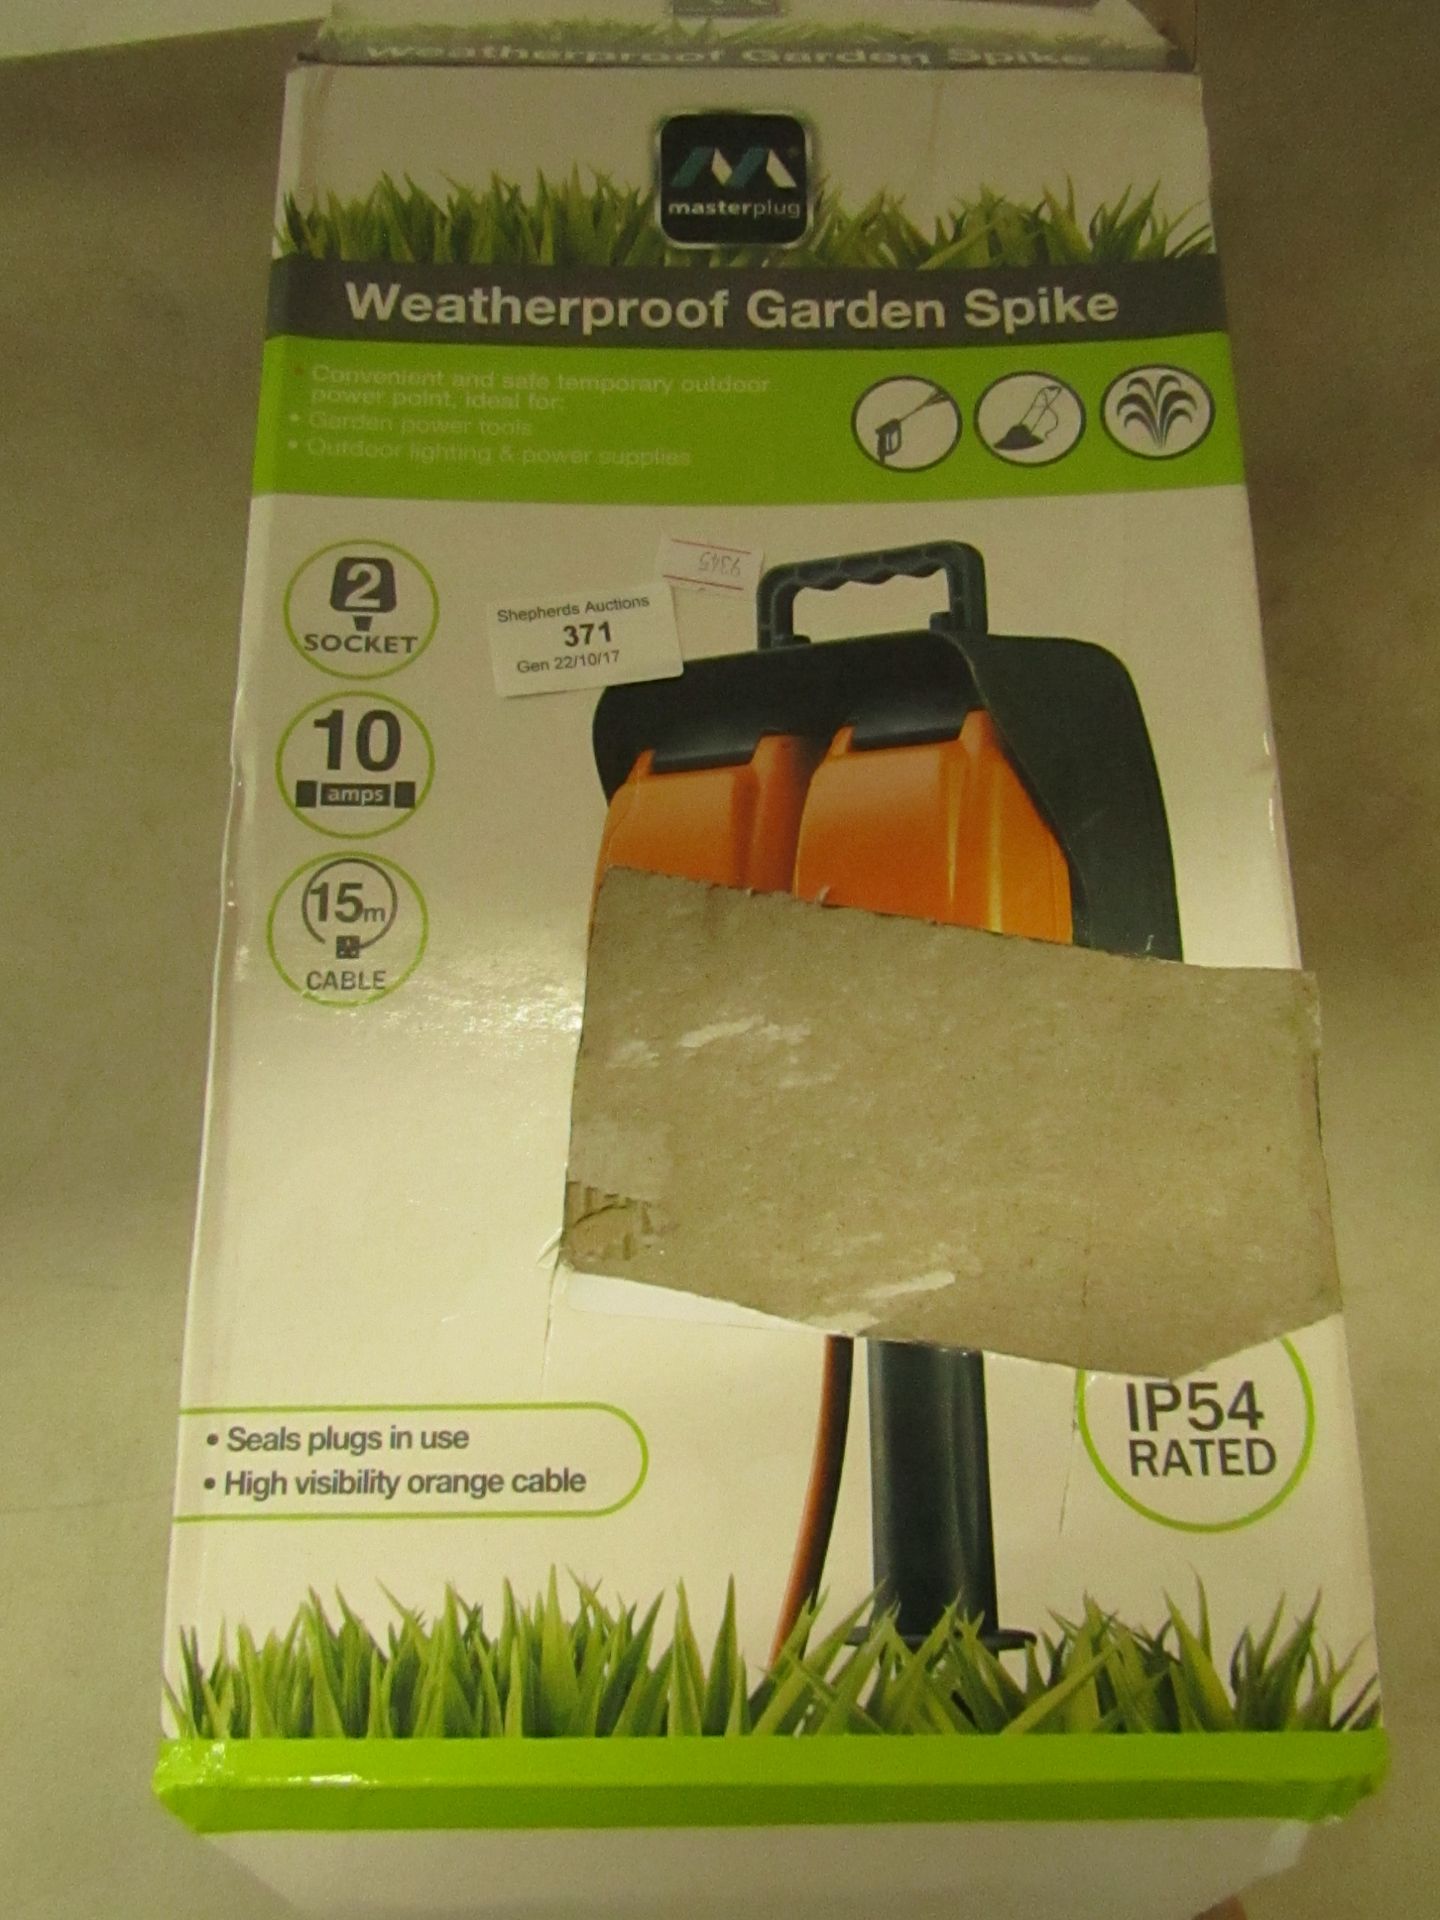 Weatherproof garden spike, boxed.